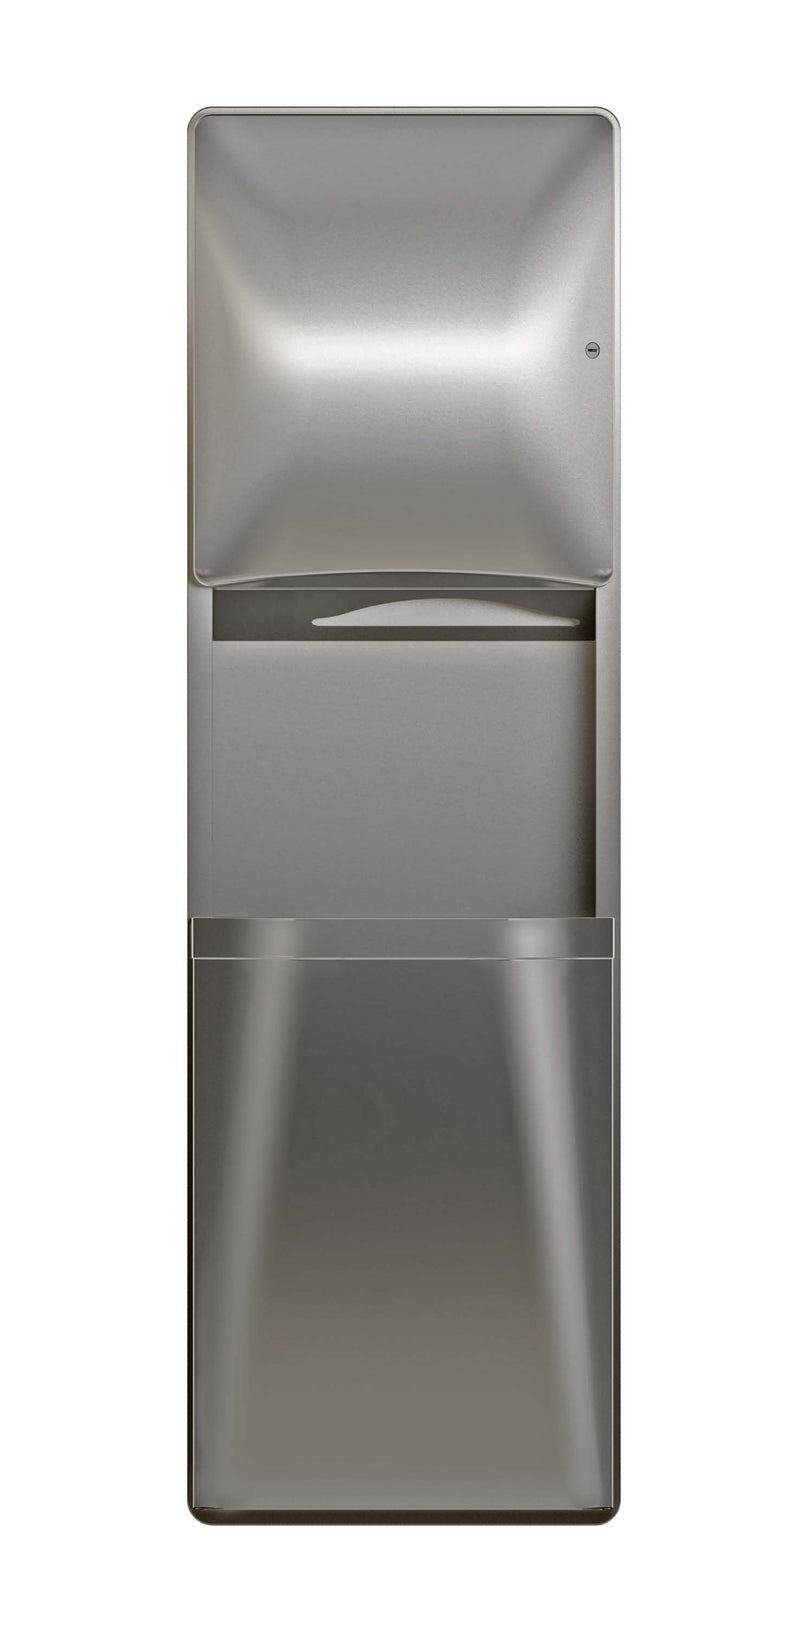 Bradley 2A05-10 Paper Towel Dispenser Waste Receptacle, Semi-Recessed